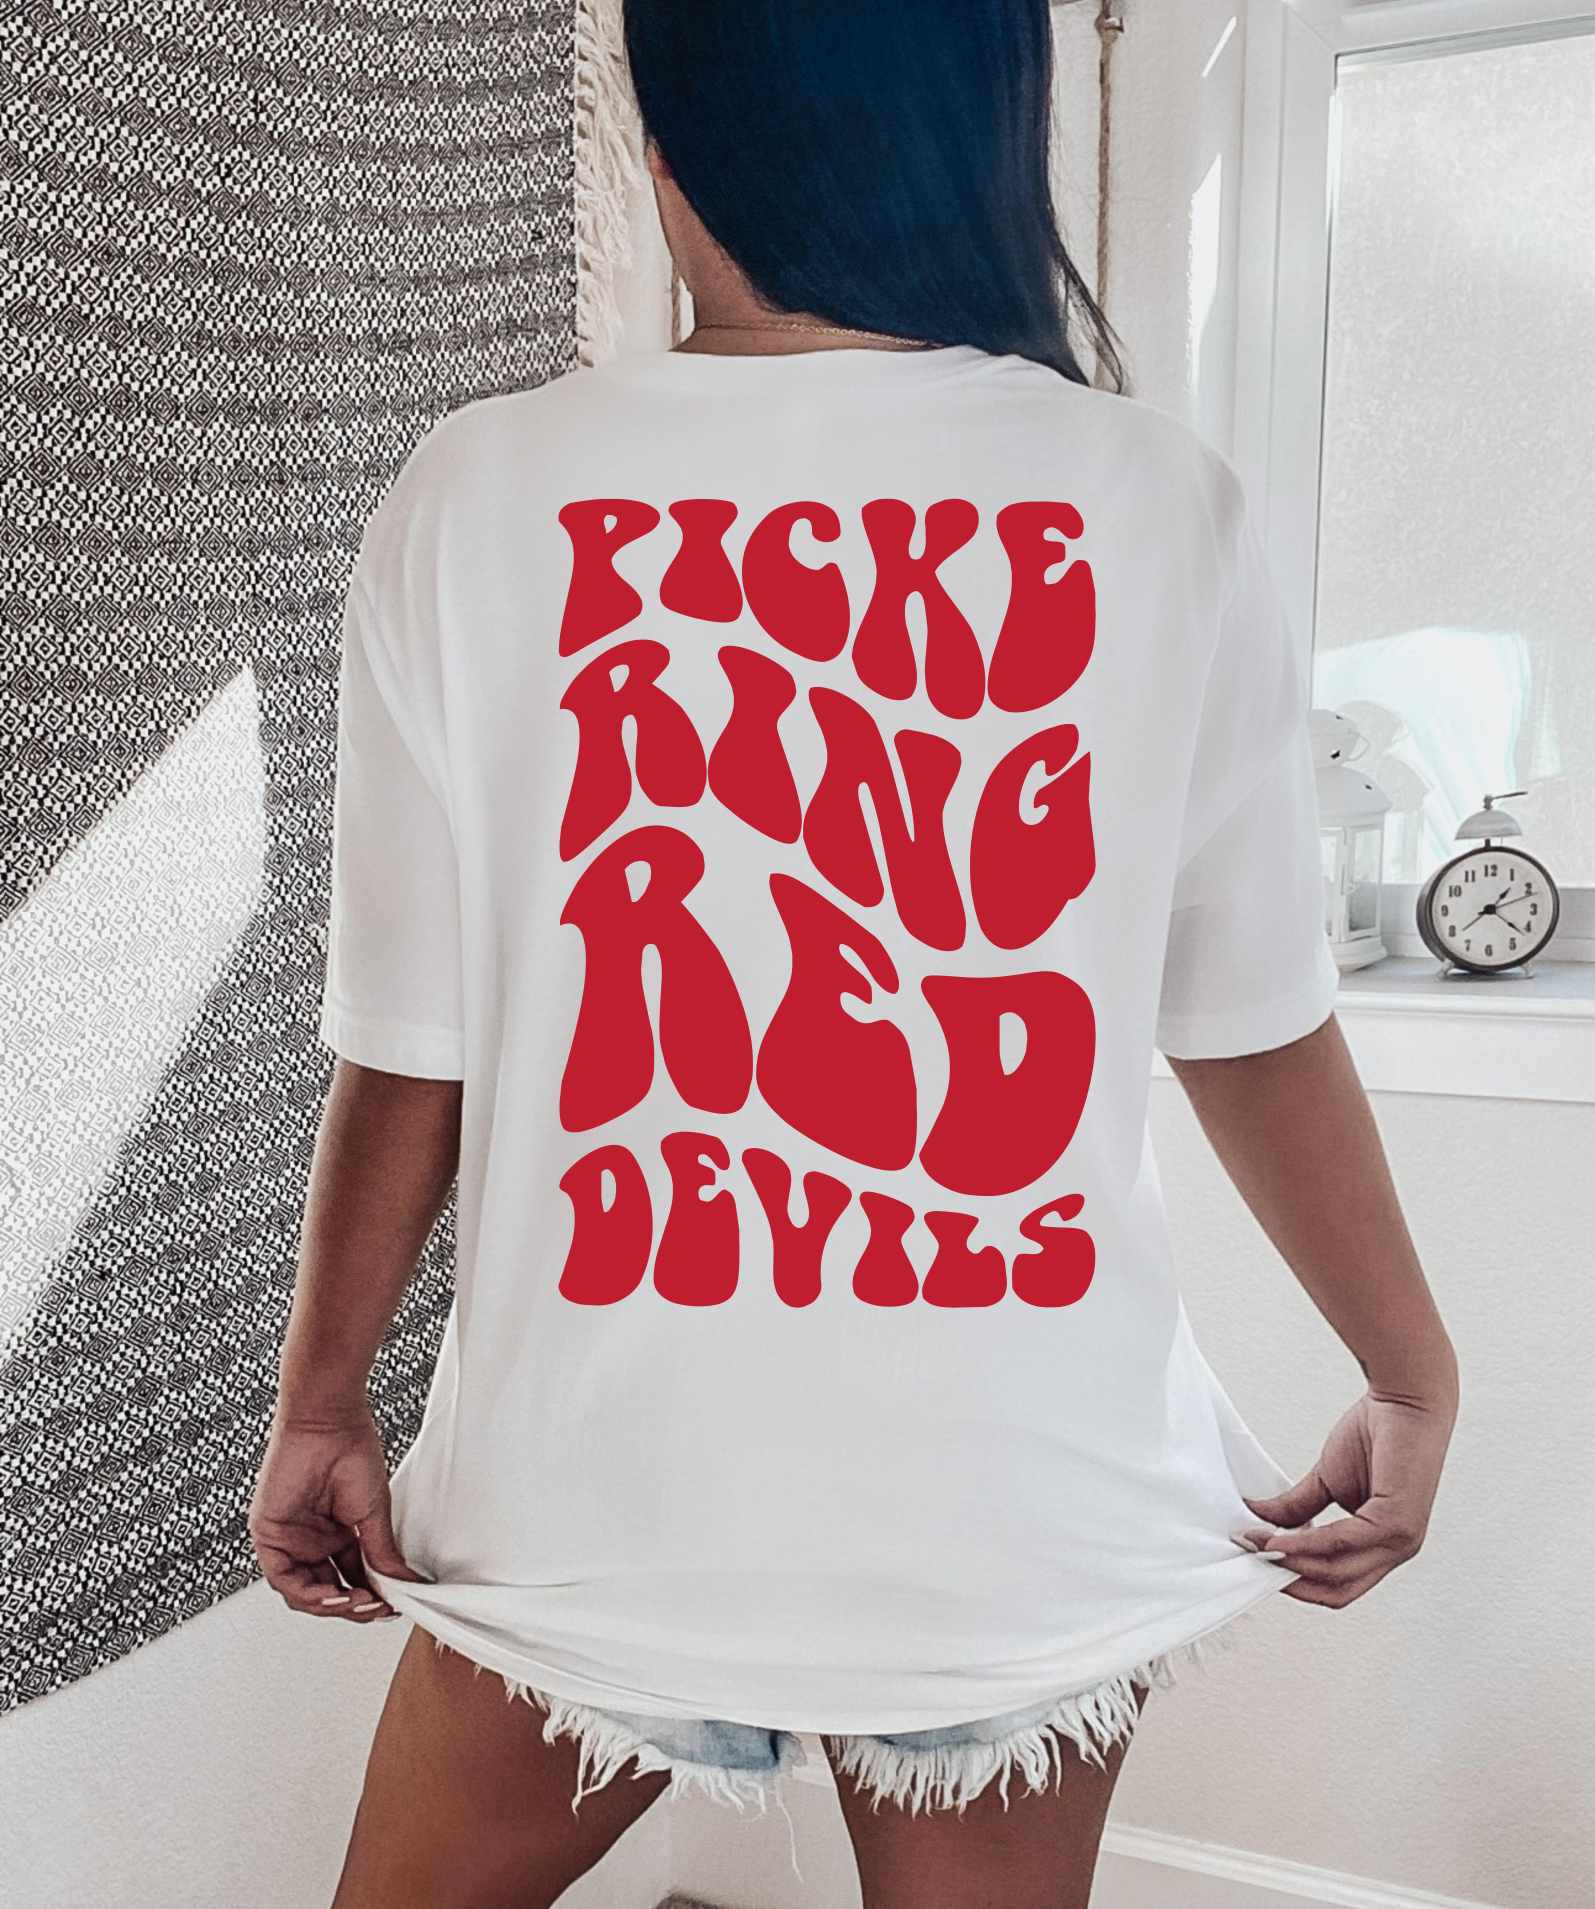 Pickering Red Devils Retro Tee